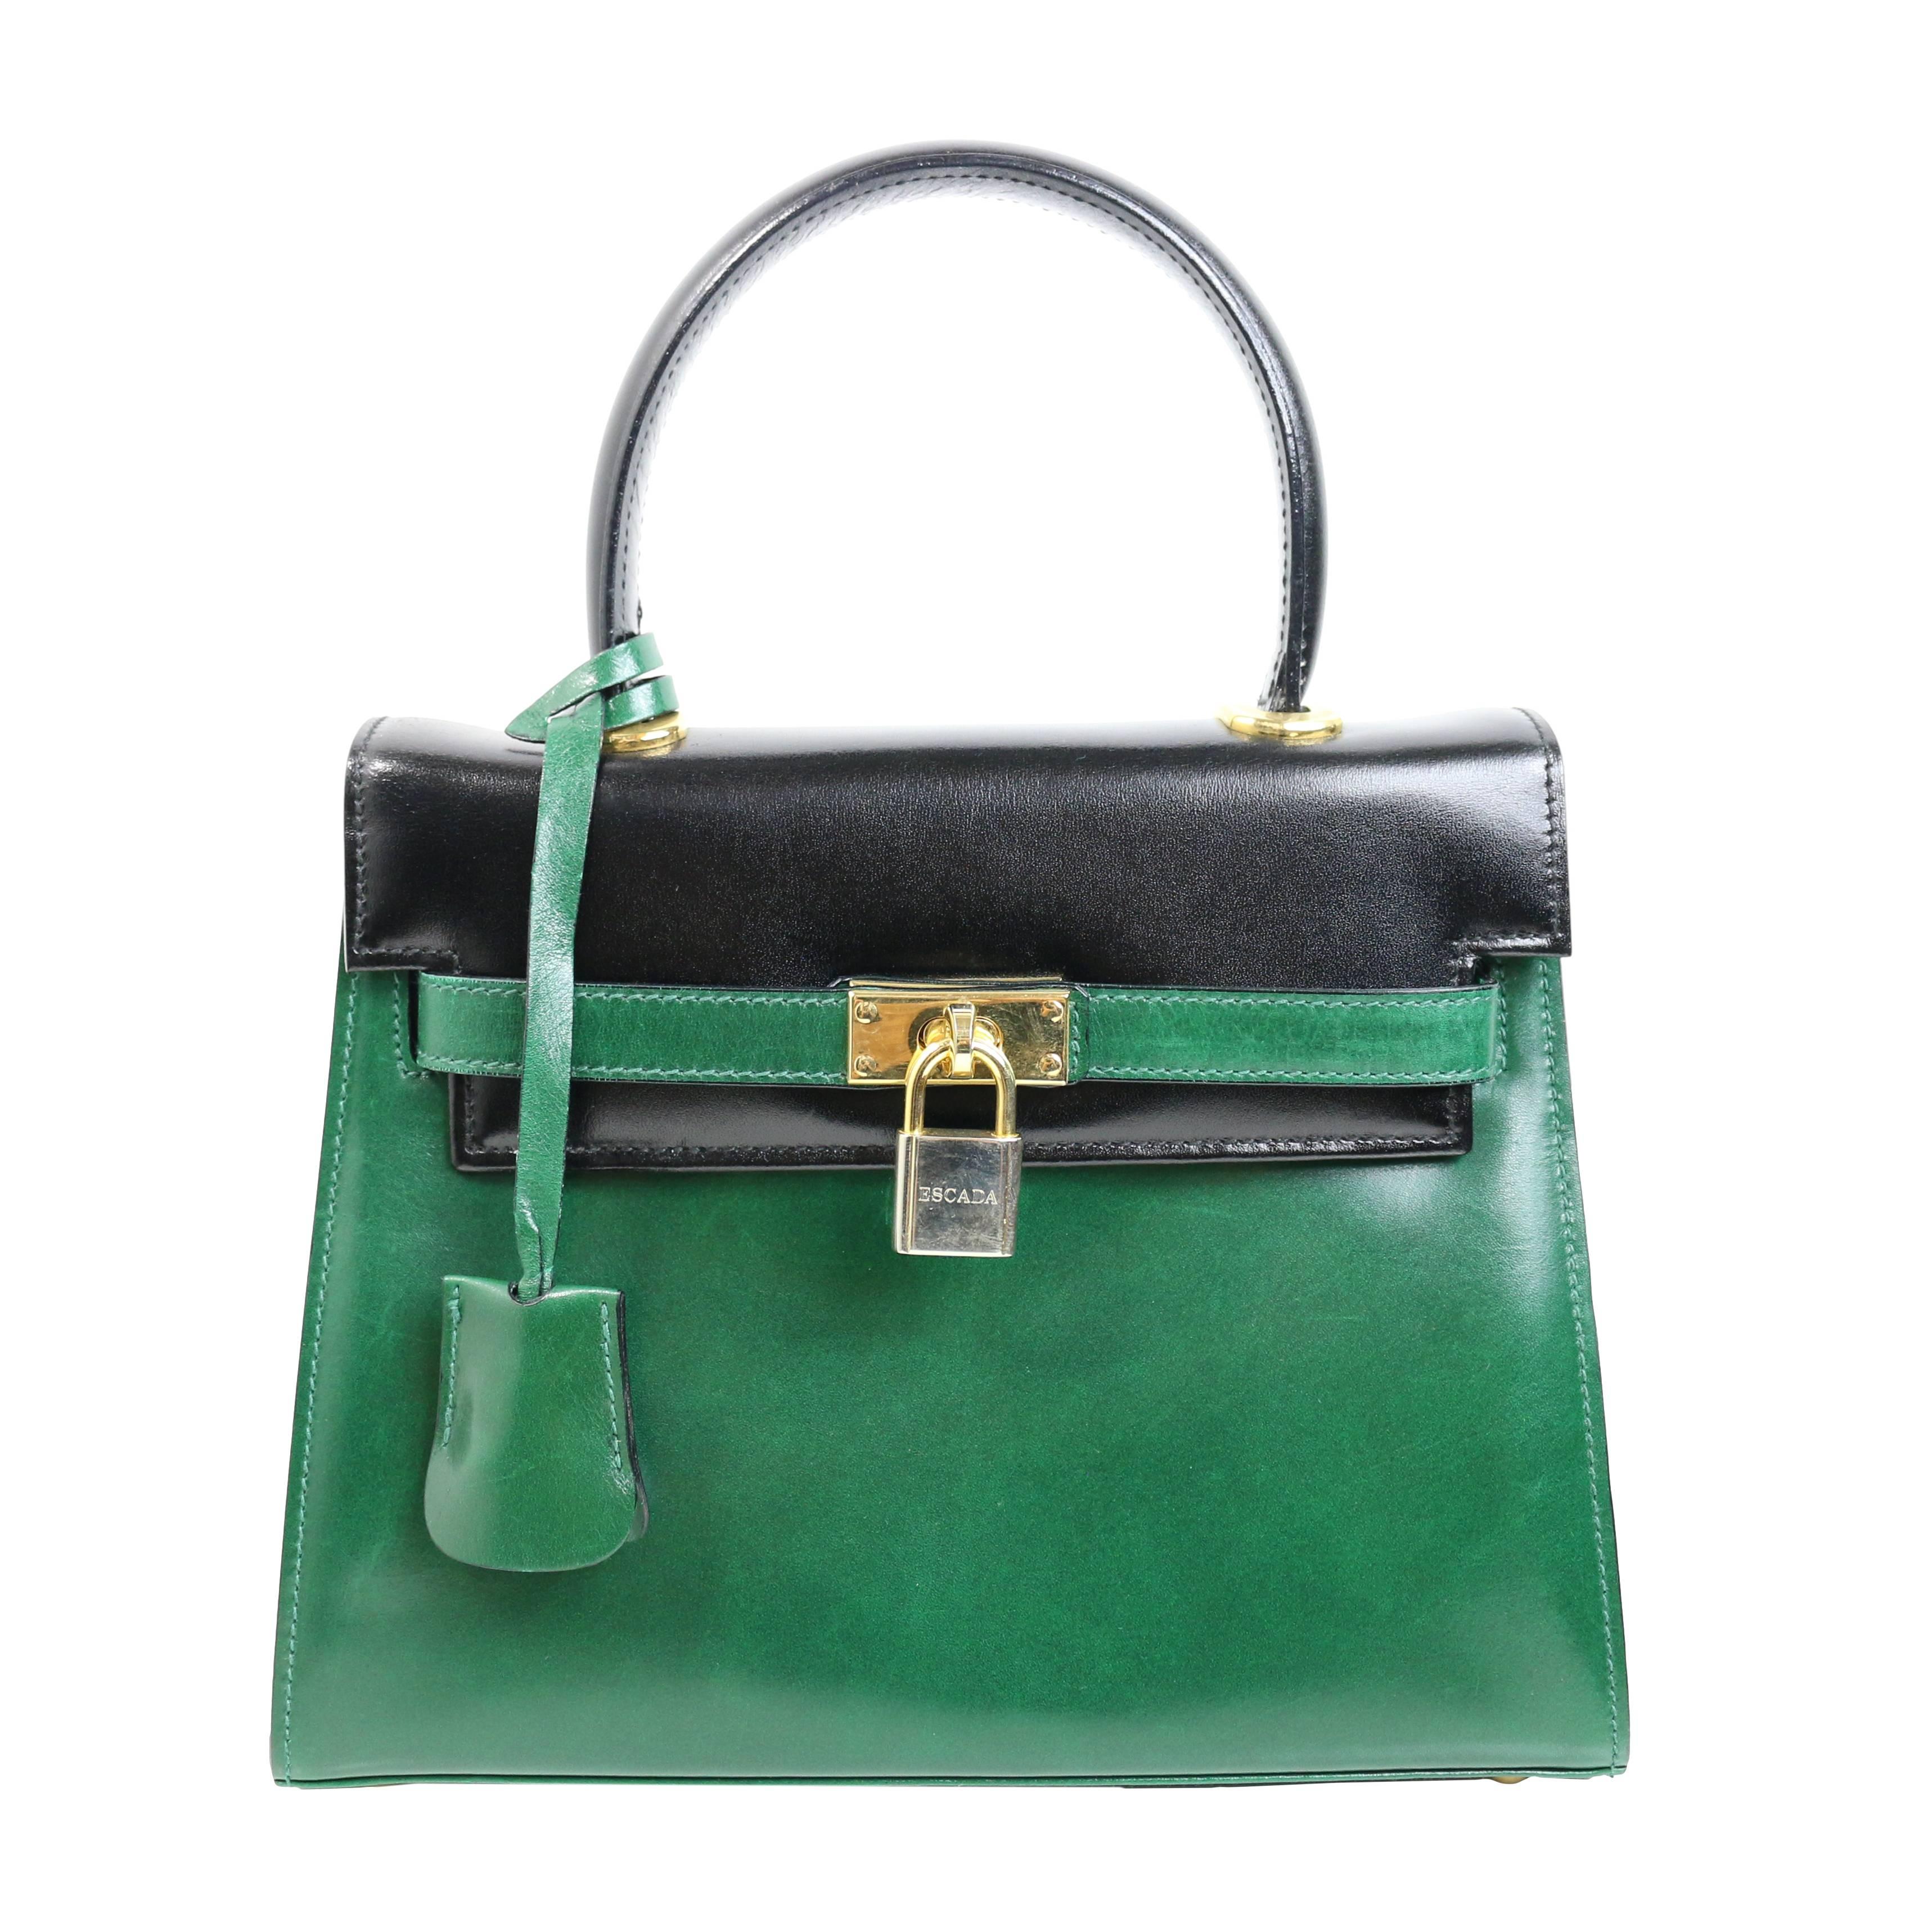 Escada Green and Black Patent Leather Handbag